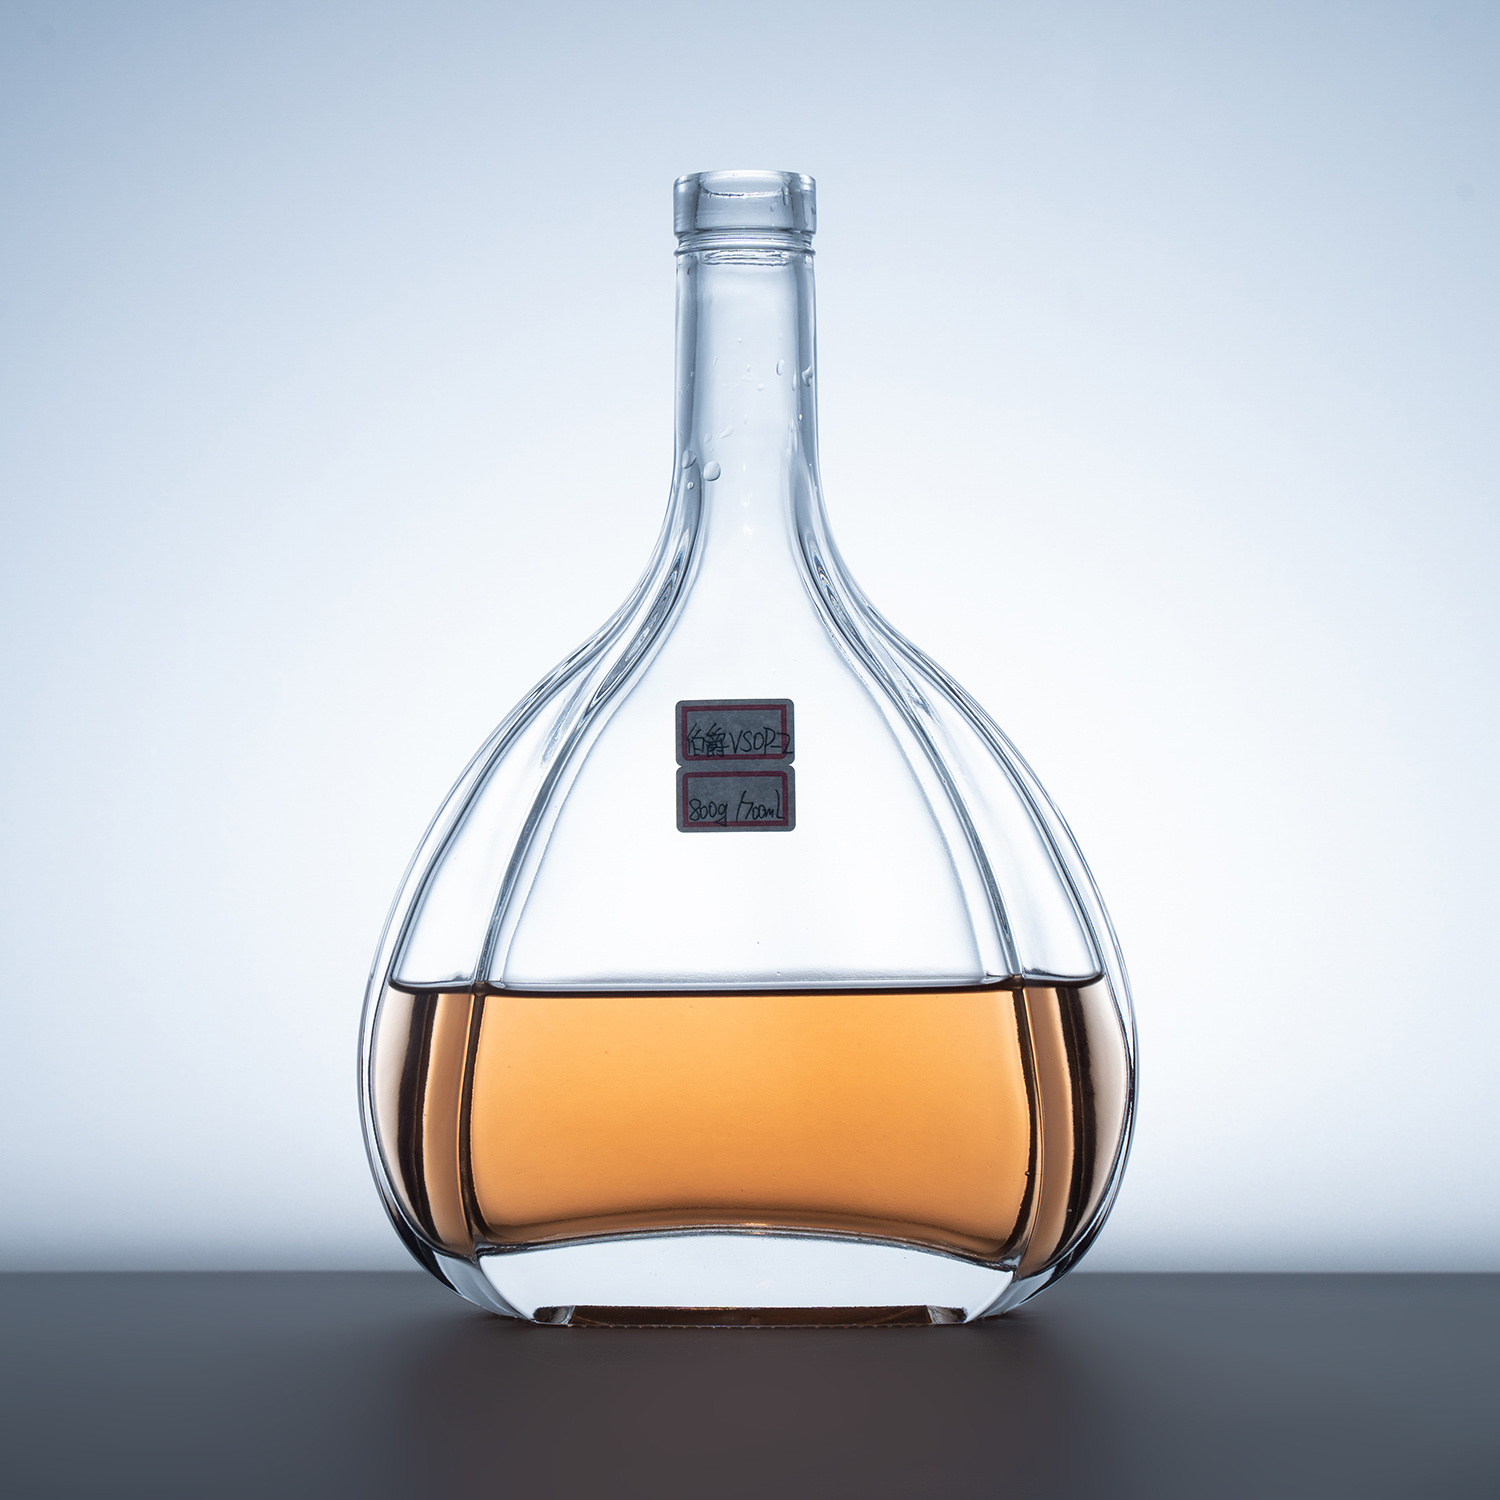 Flat-Shape-Brandy-Xo-Spirit-750ml-Packaging-Container-Mini-Alcohol-Empty-Glass-Liquor-Bottle-5...jpg